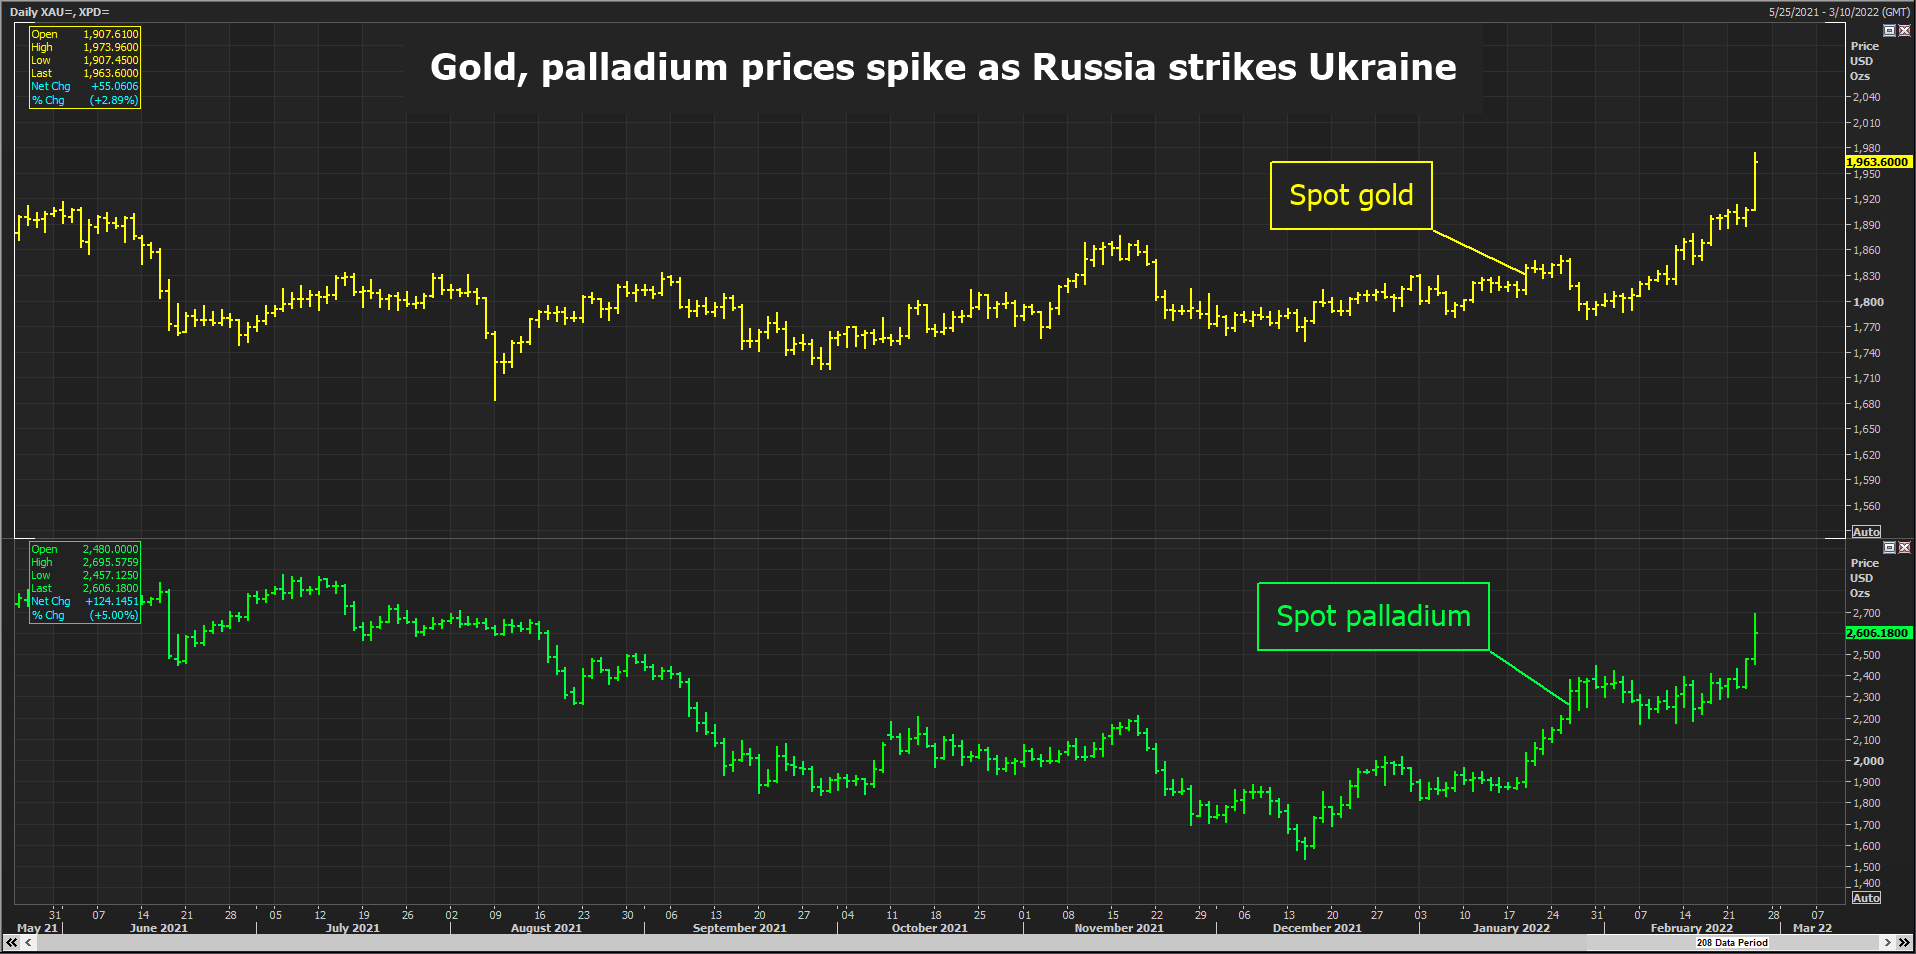 Gold, palladium soar as Russia invades Ukraine